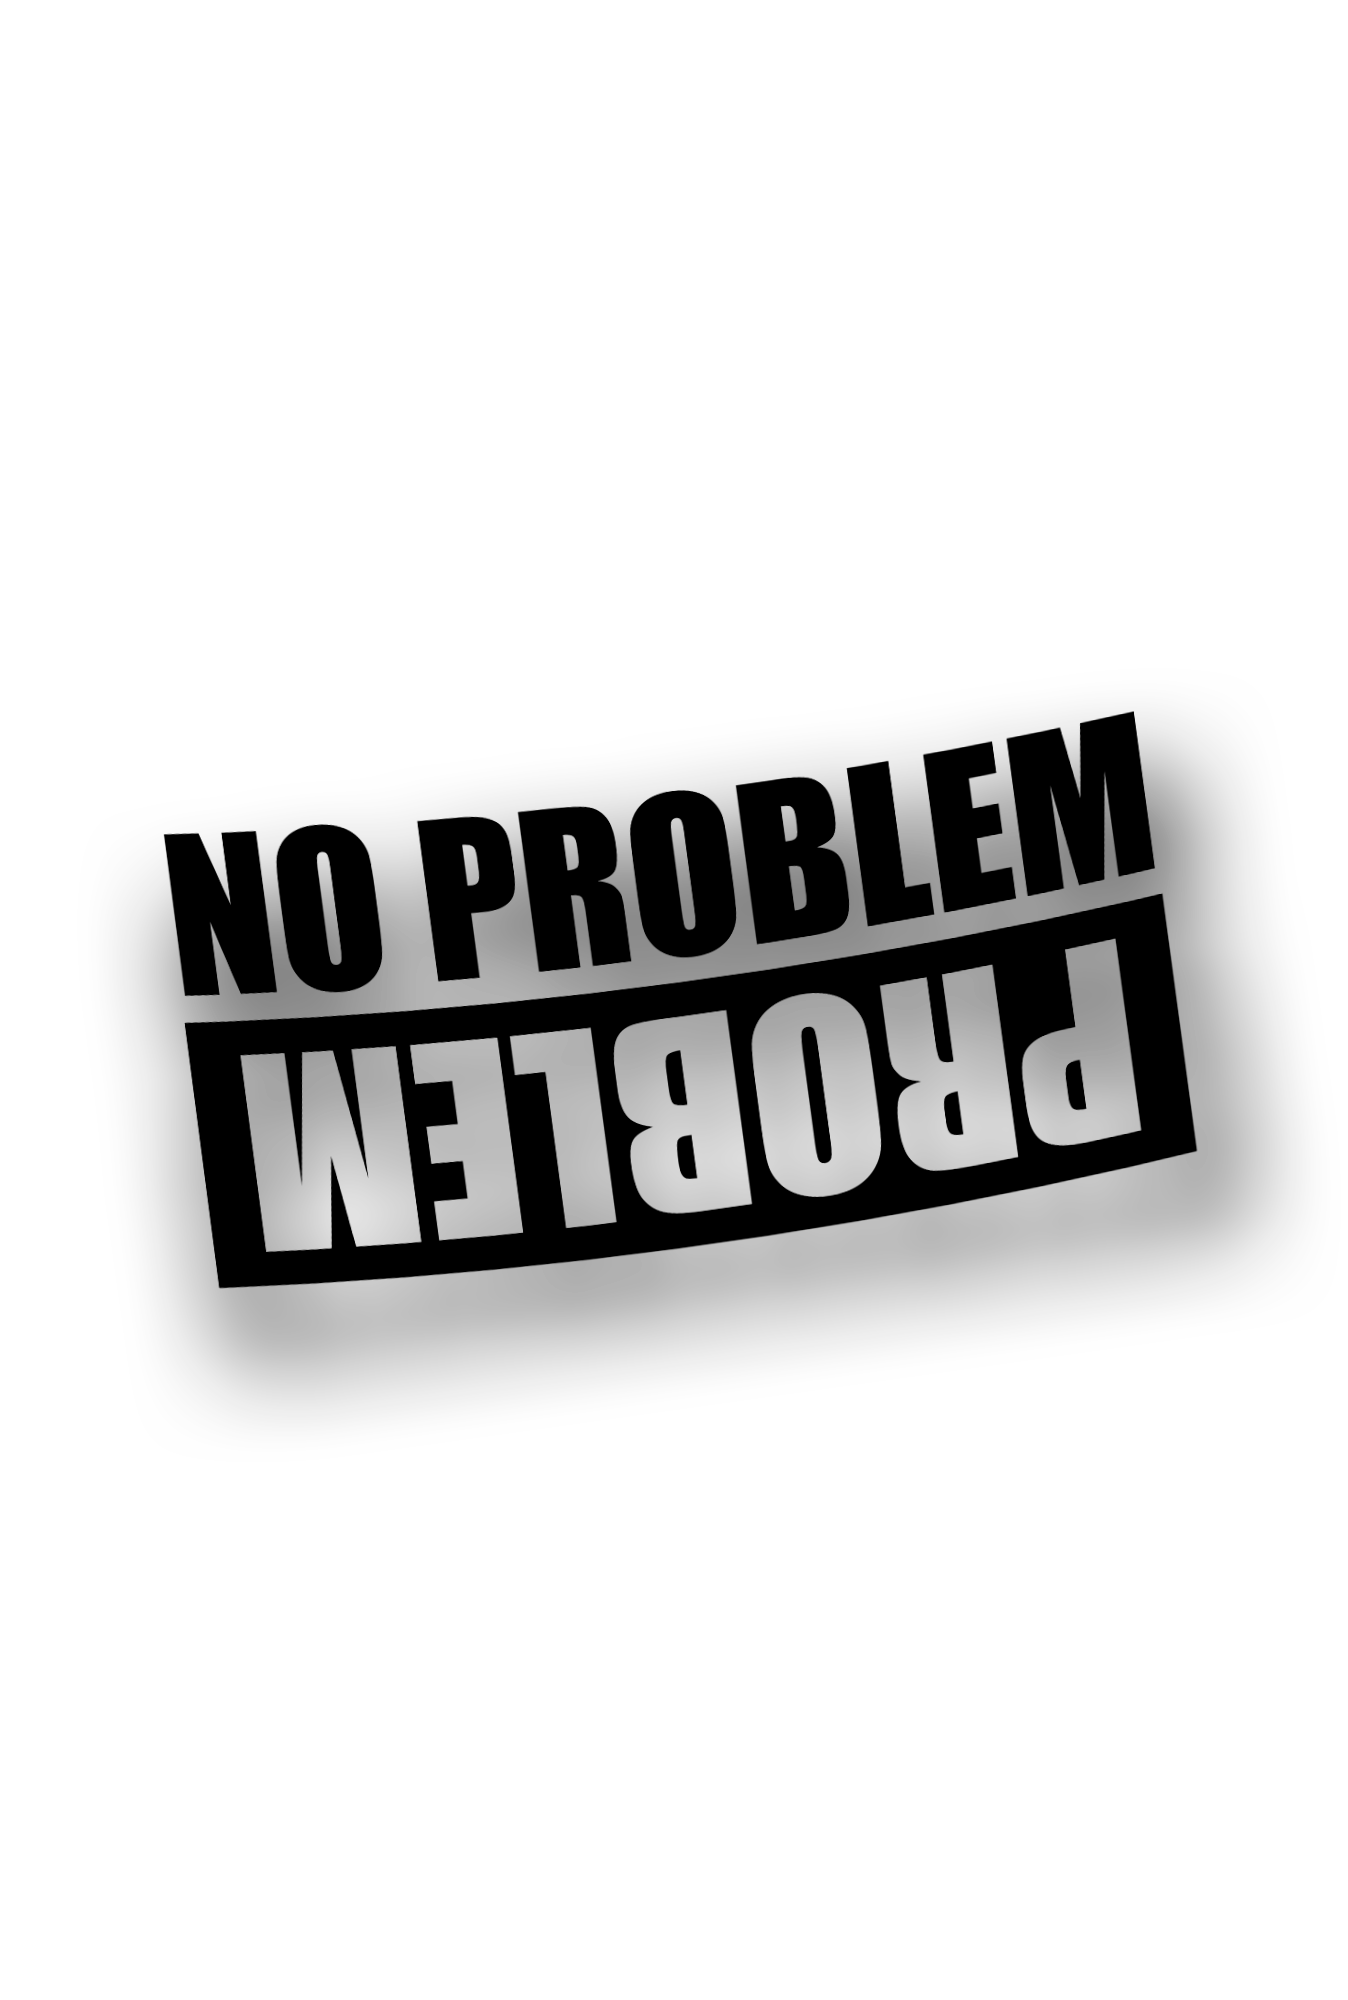 ''No problem - problem'' - Plotted Vinyl Sticker